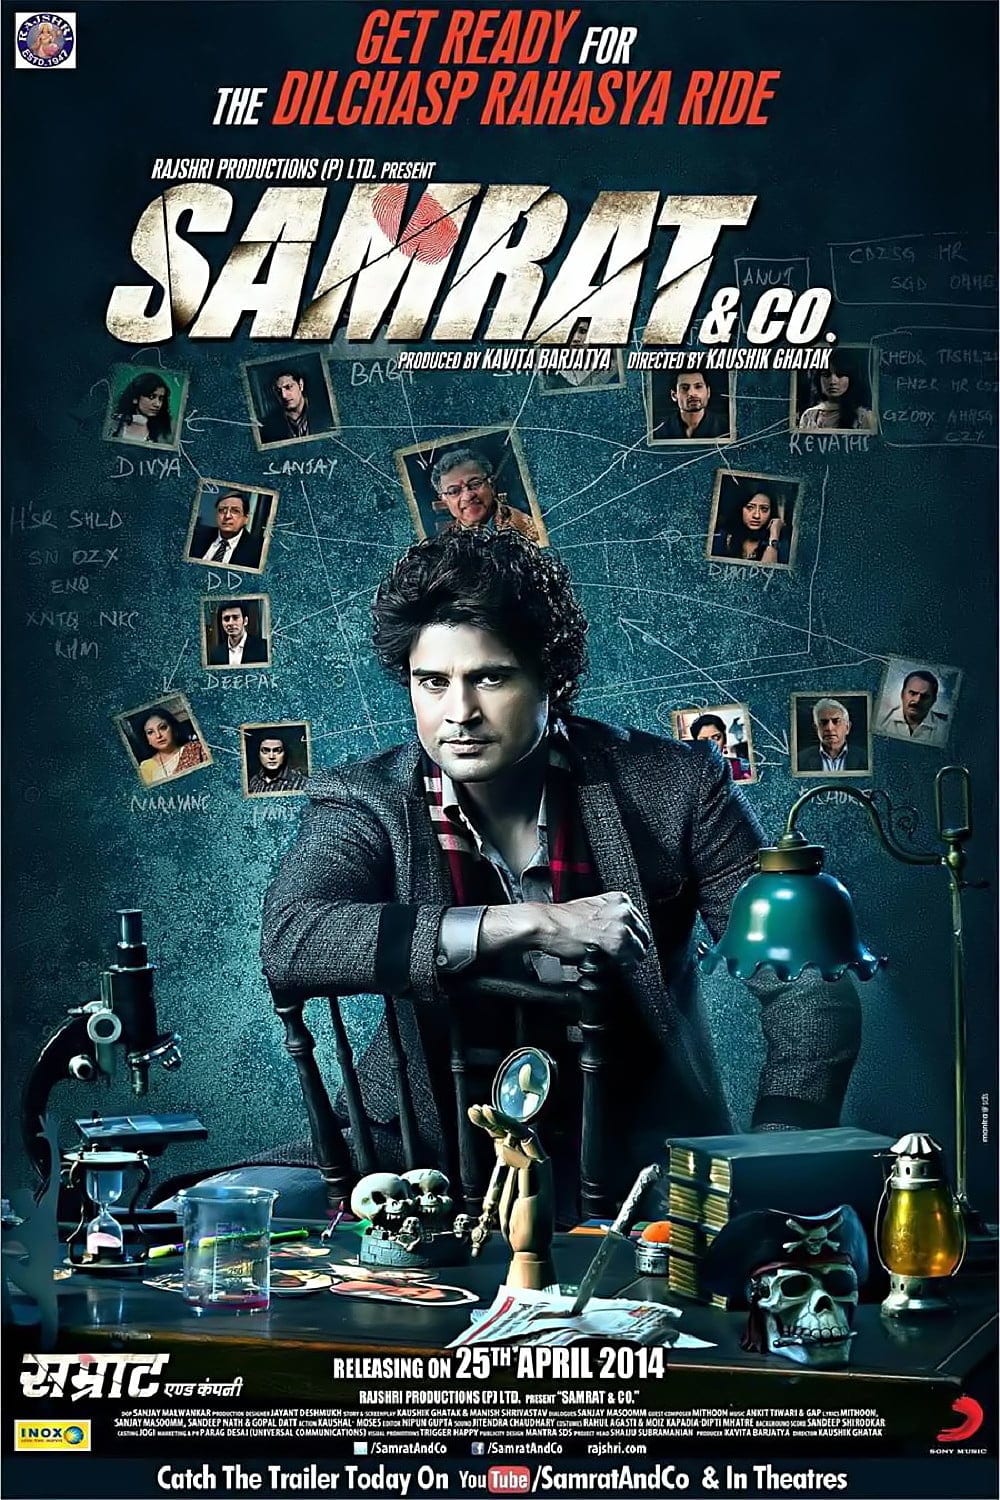 Poster for the movie "Samrat & Co."